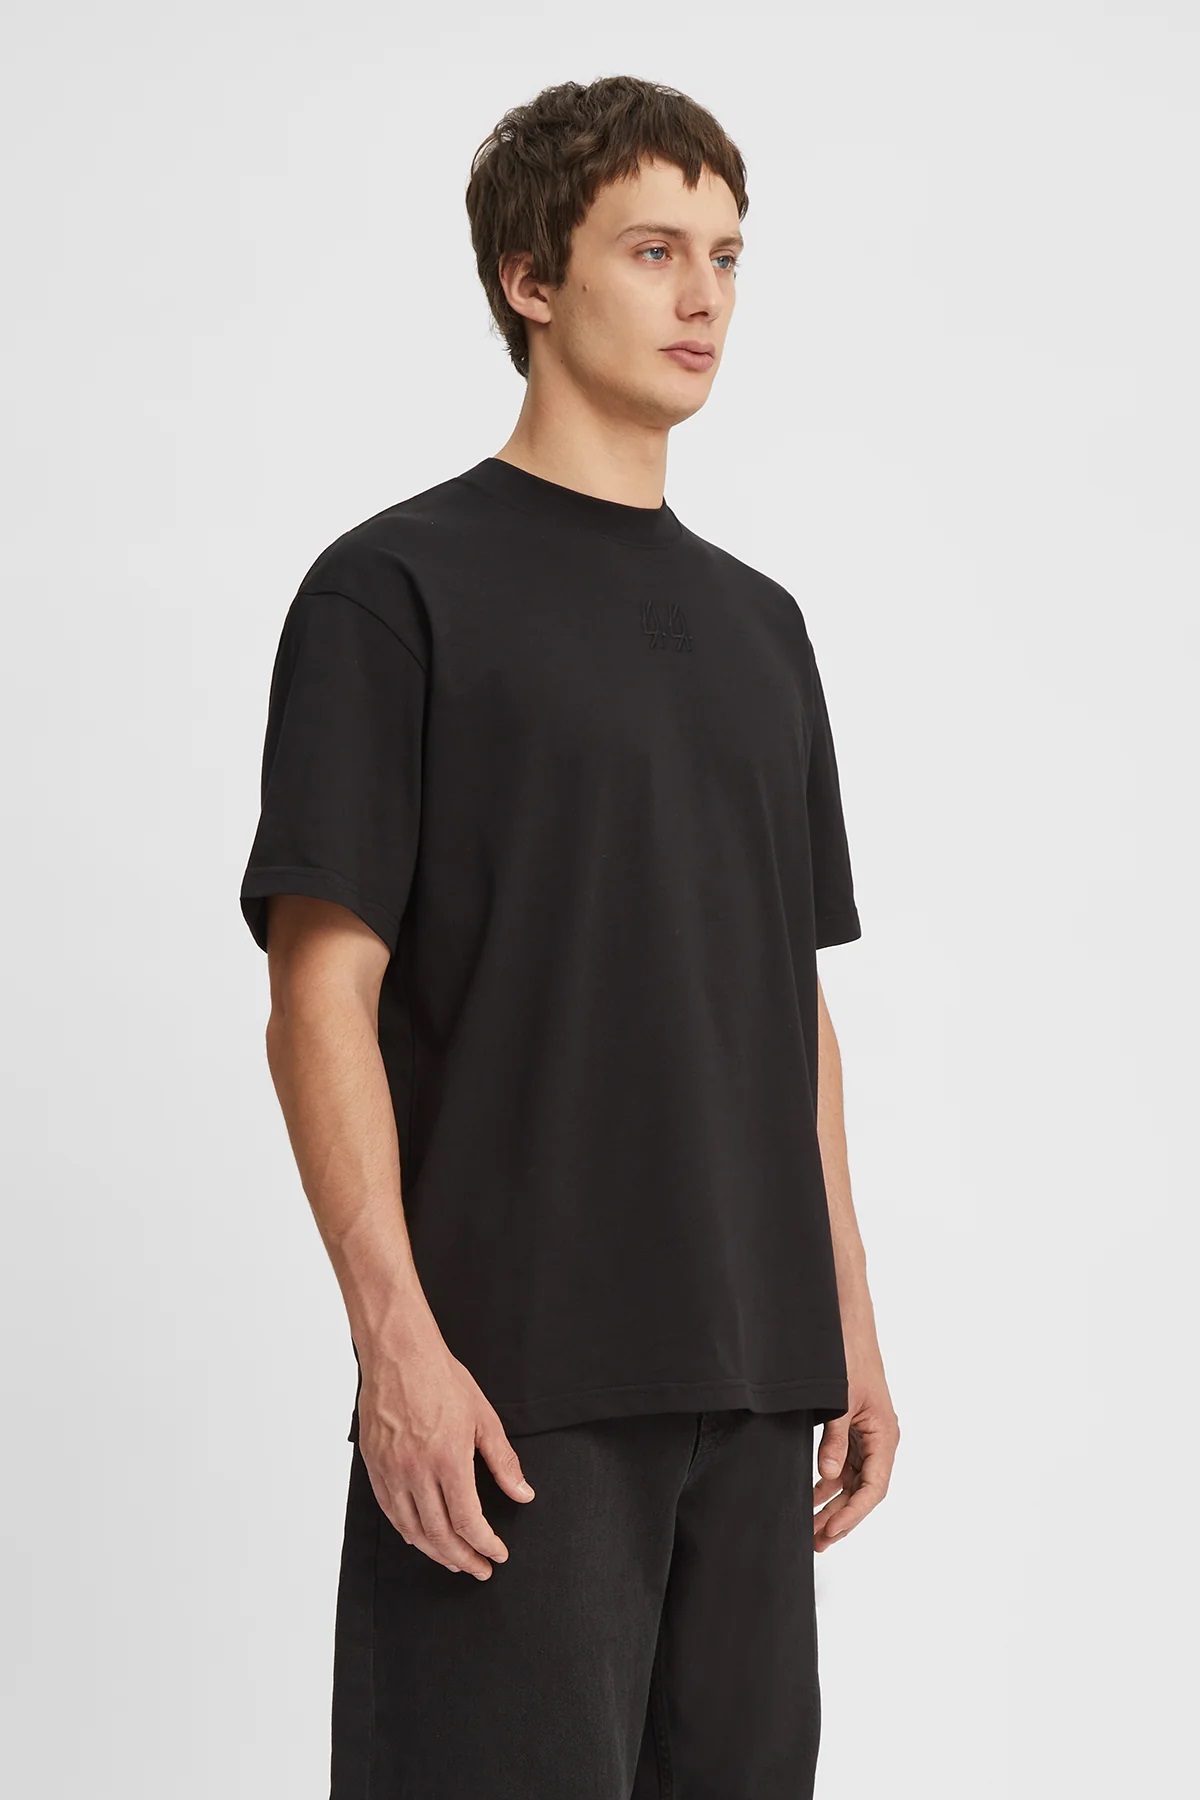 44 LABEL GROUP Original T-Shirt in Black/Neon Print 2XL